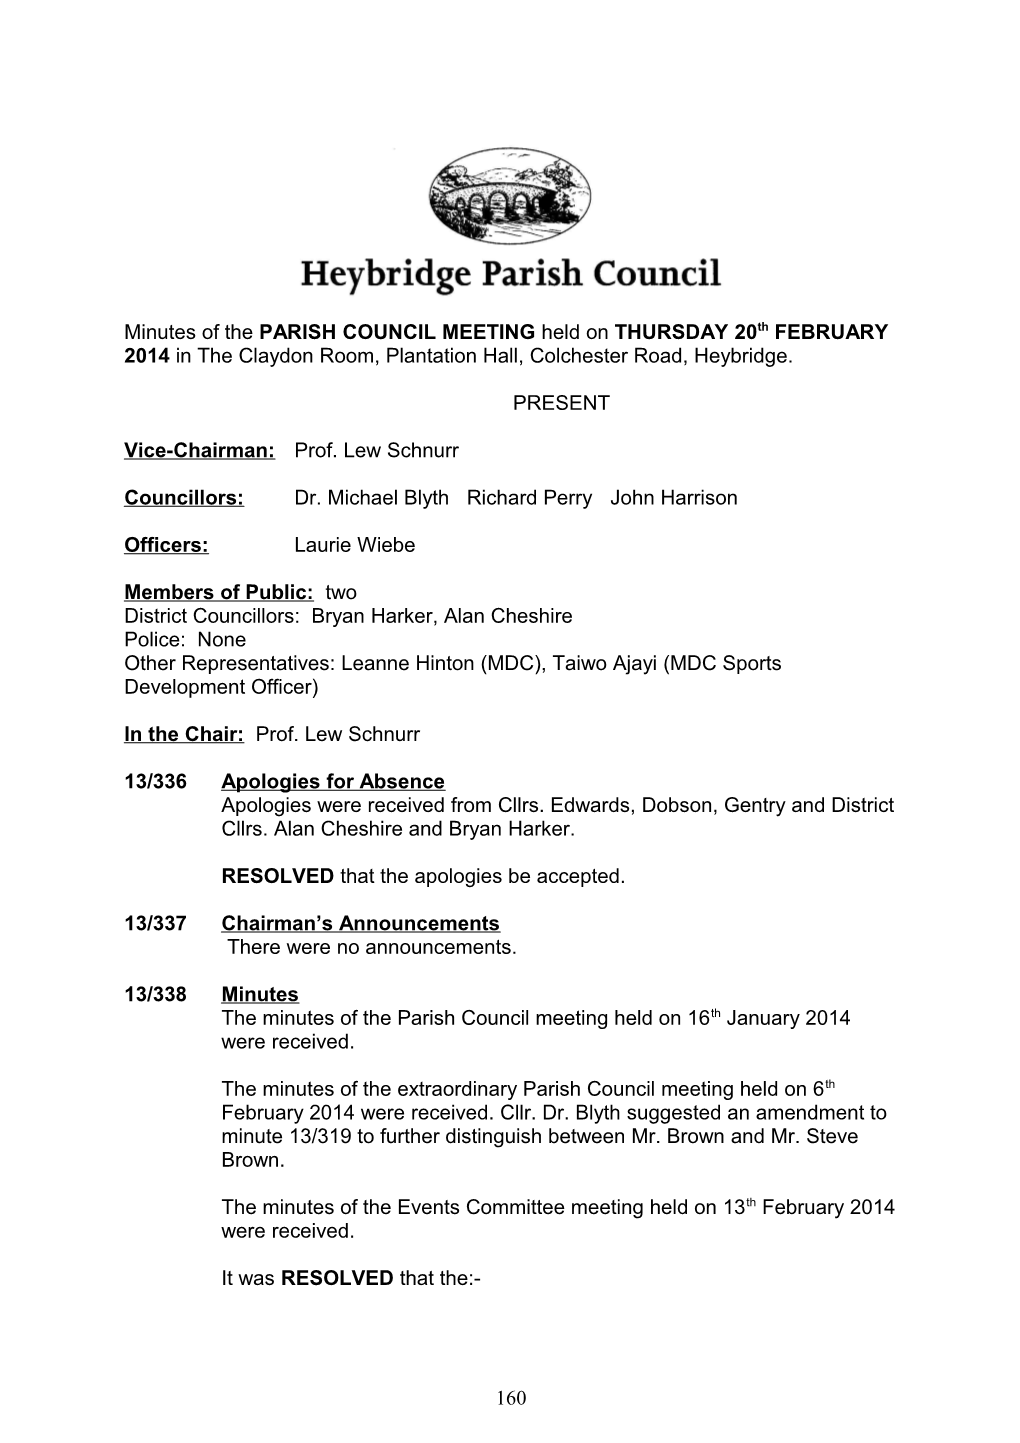 Councillors: Dr. Michael Blyth Richard Perry John Harrison